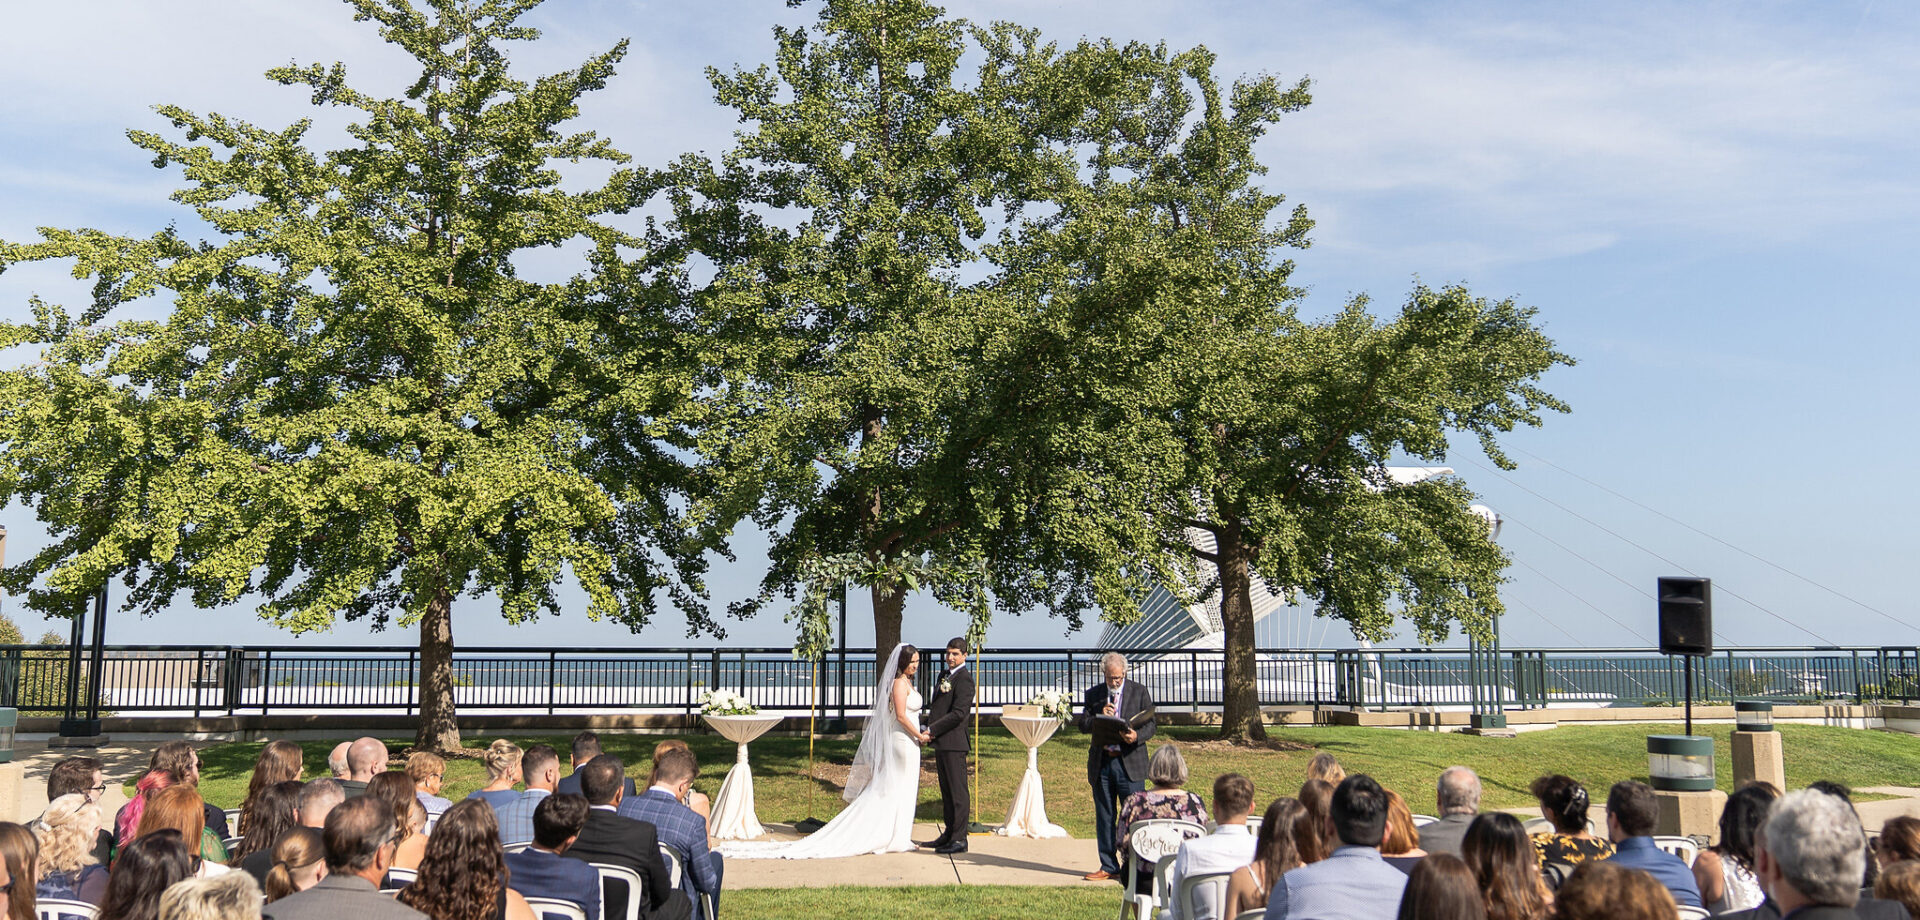 Outdoor wedding ceremony before beautiful tree